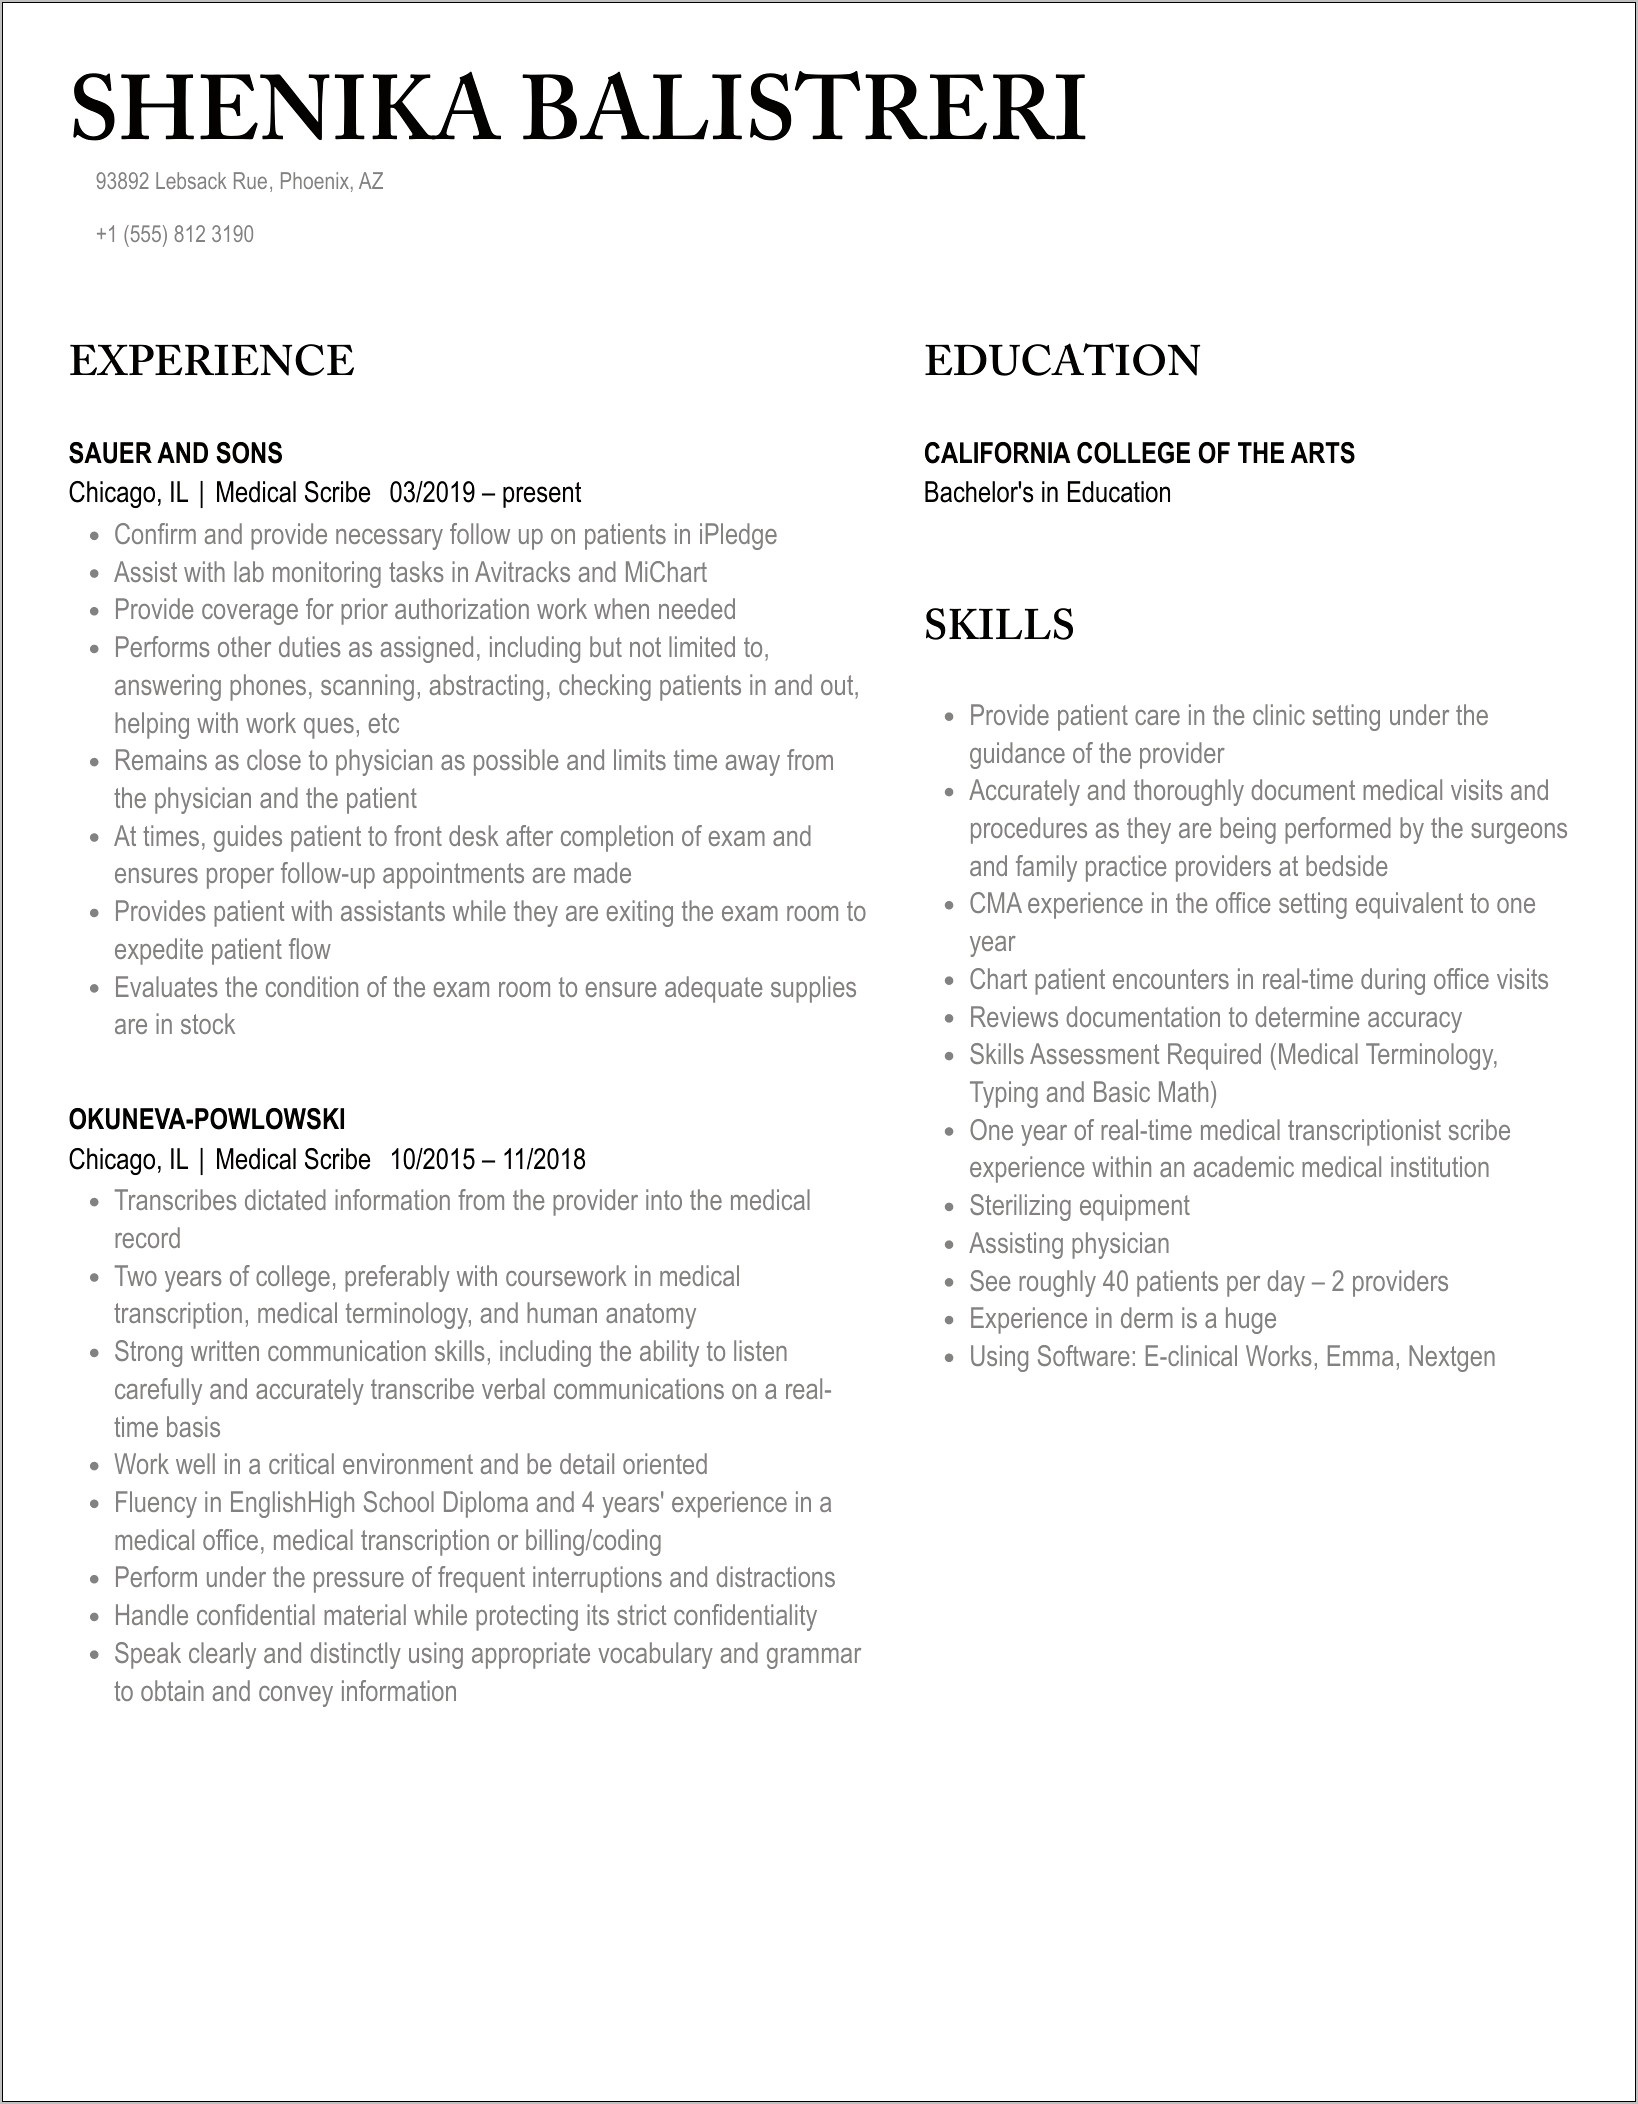 Resume For Medical Scribe Job